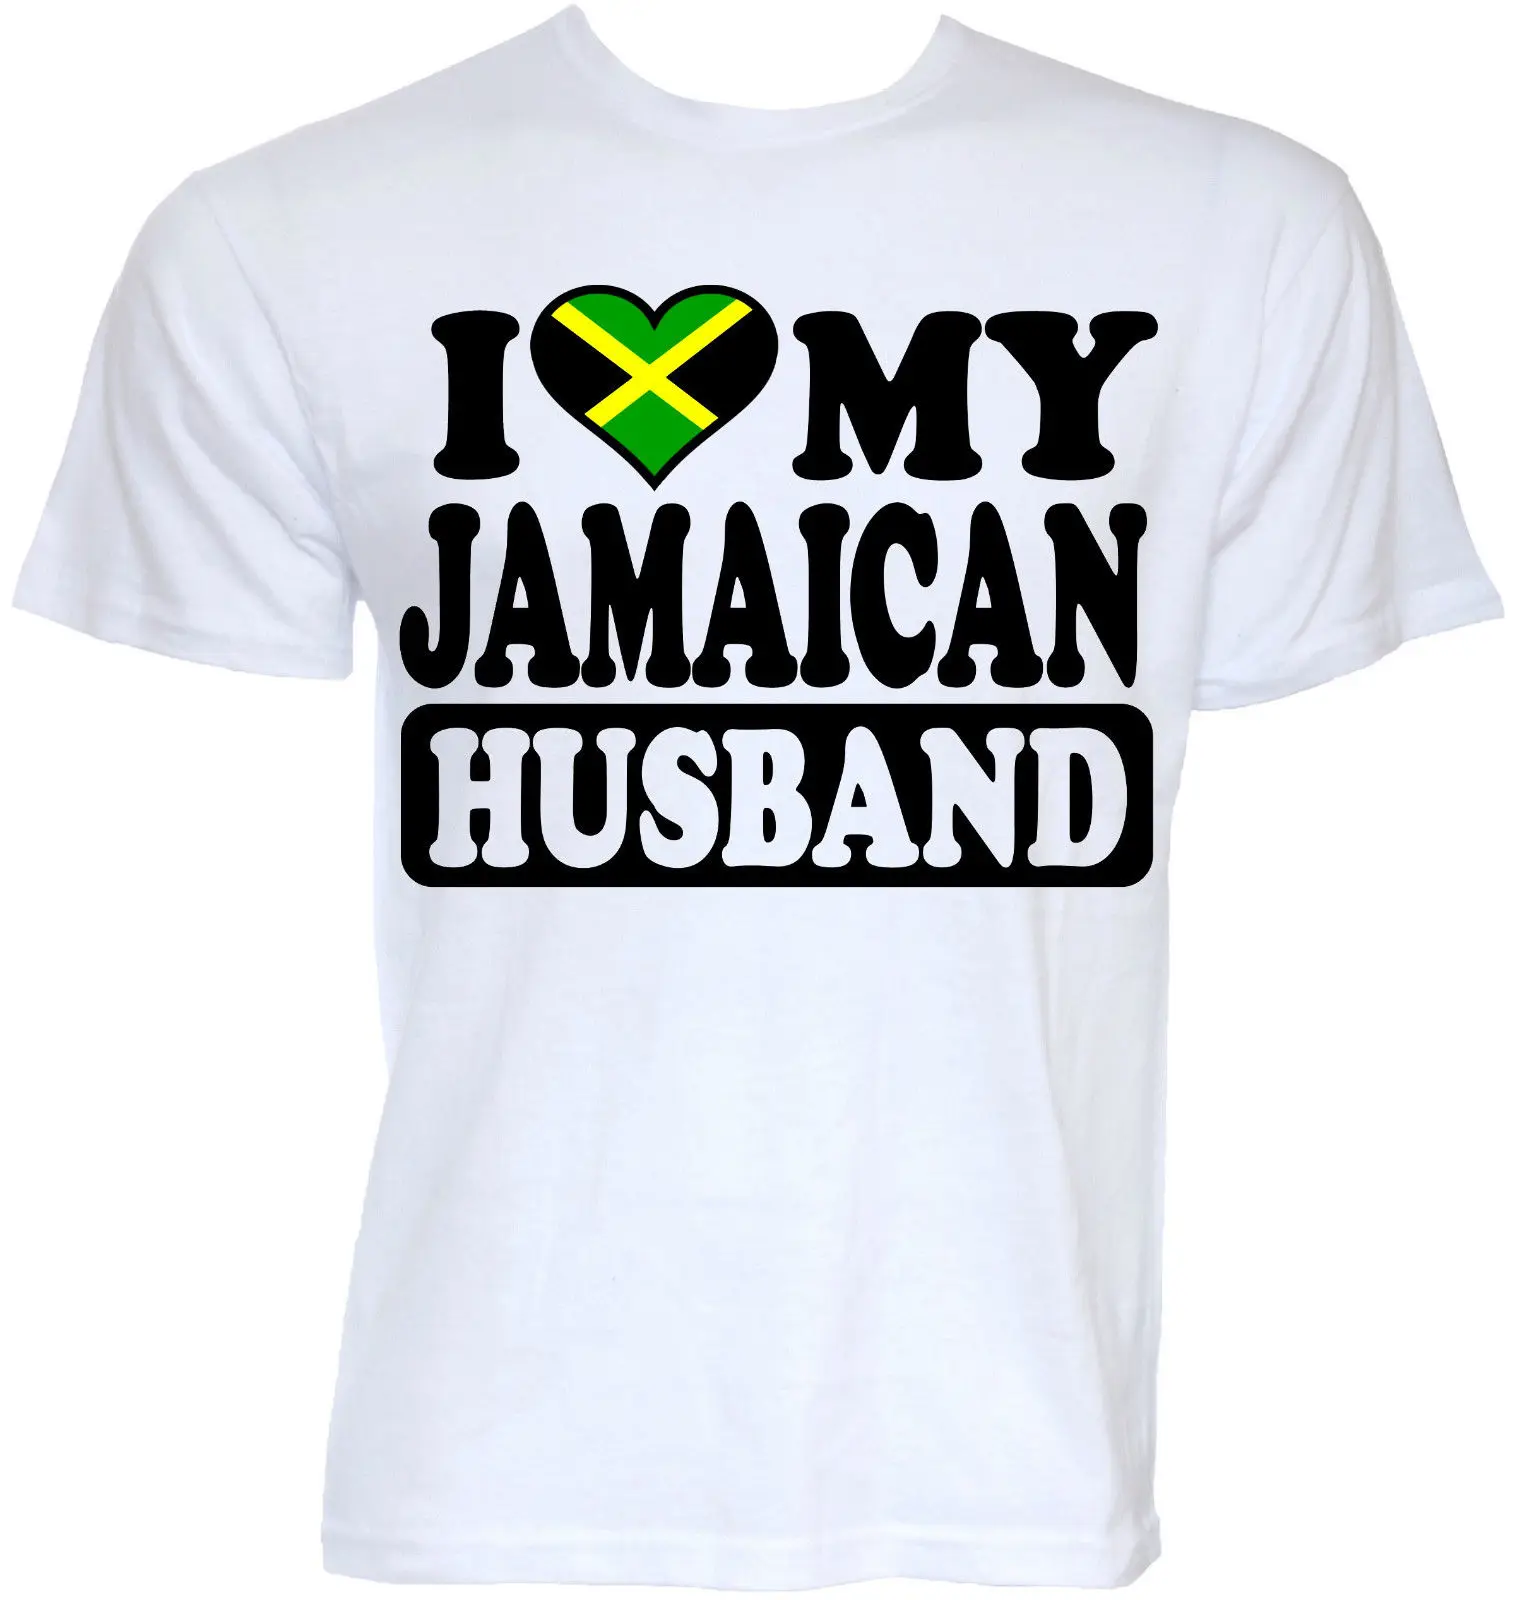 Mens Funny Cool Novelty Jamaican Husband Jamaica Flag Joke Slogan Ts